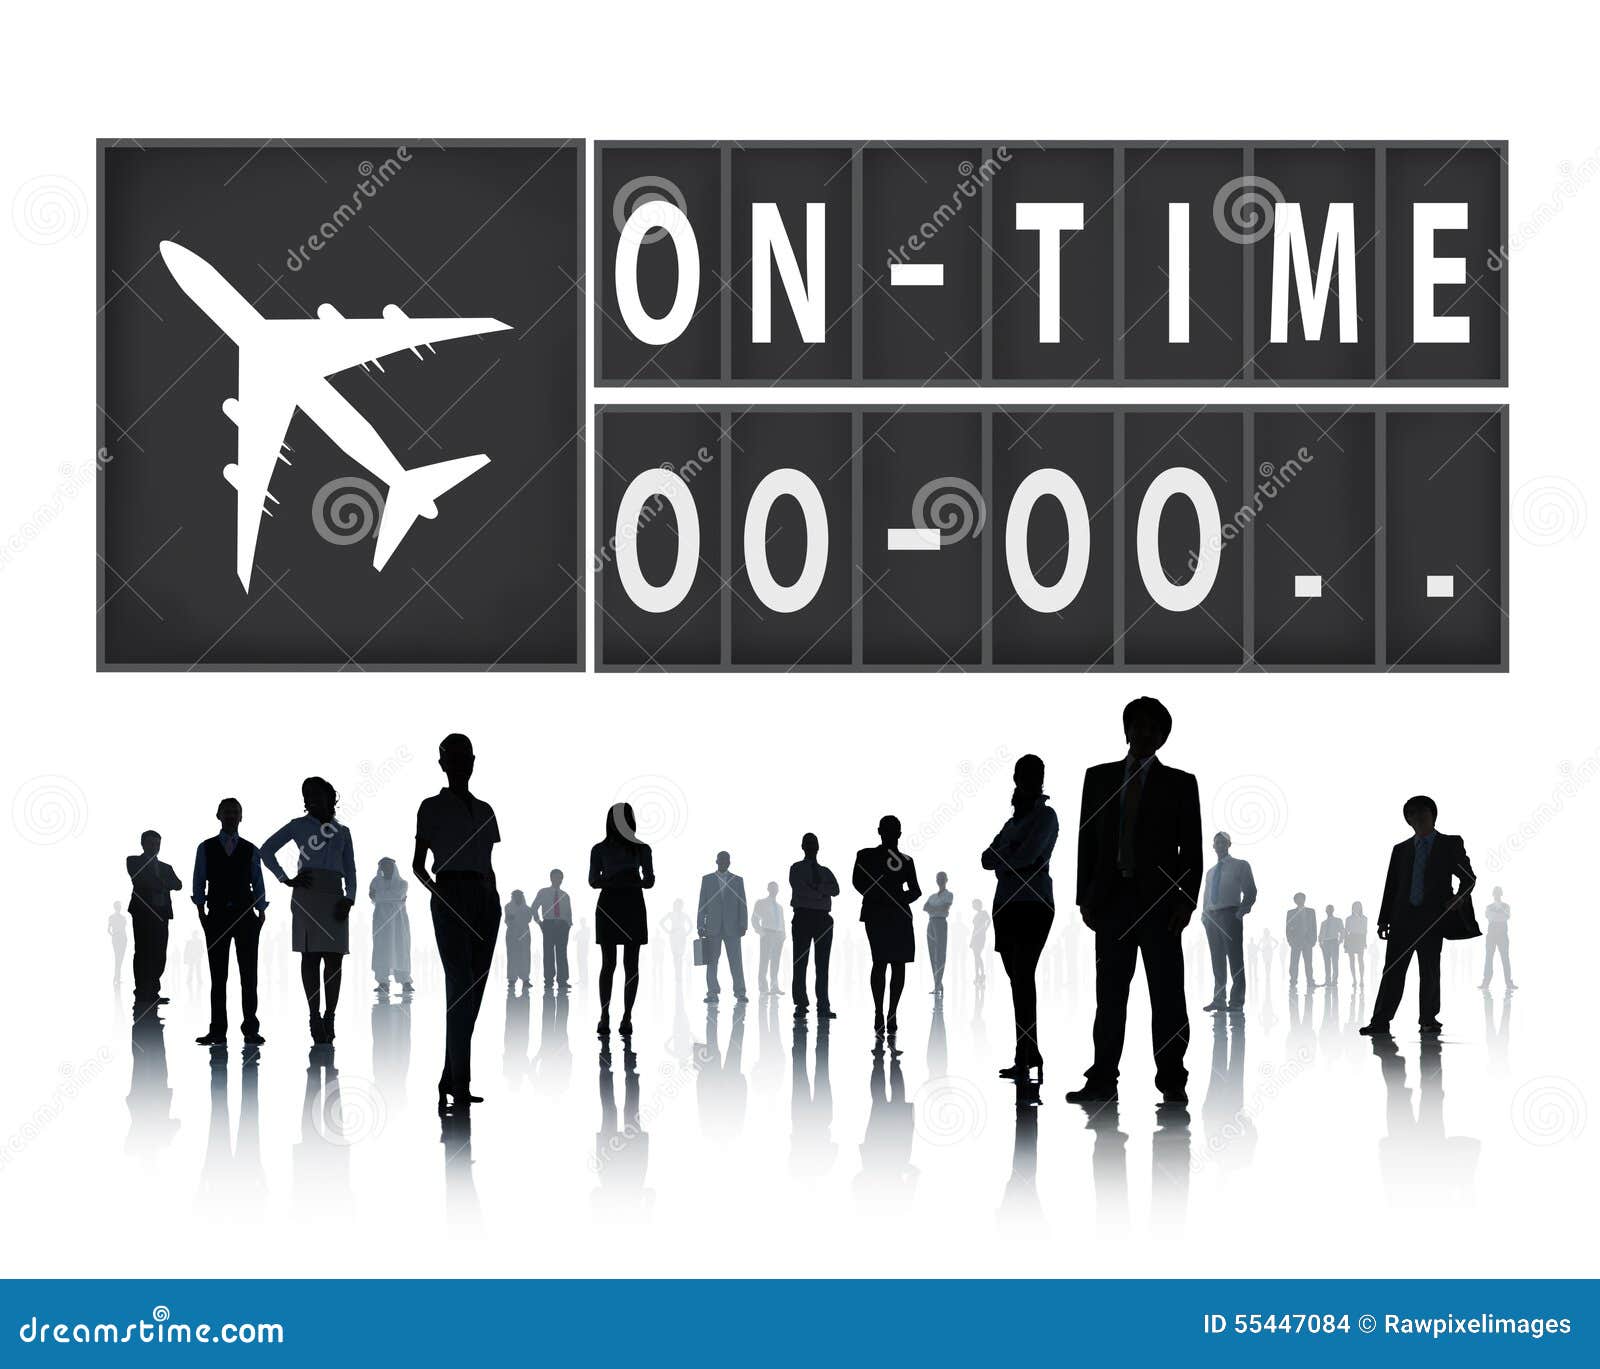 on time punctual efficiency organization management concept